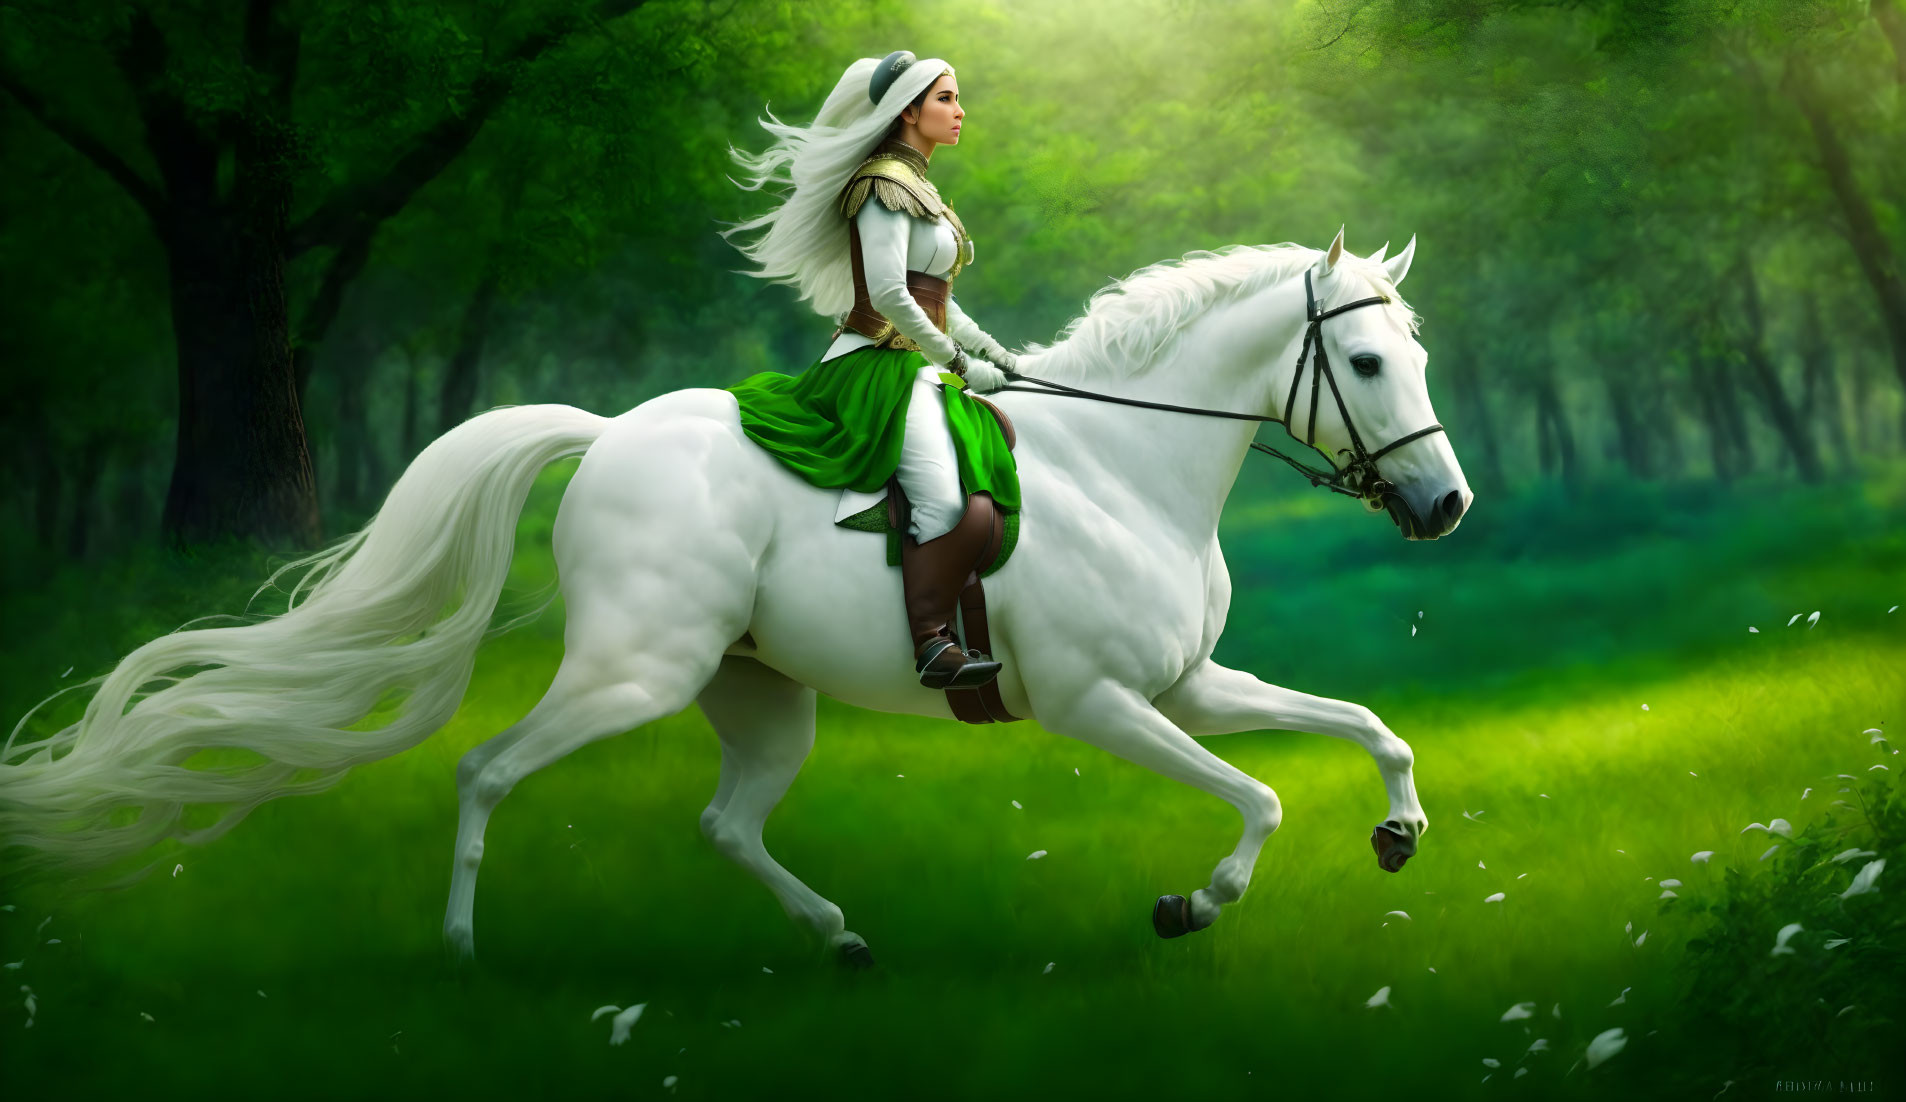 Woman on horseback running through the forest